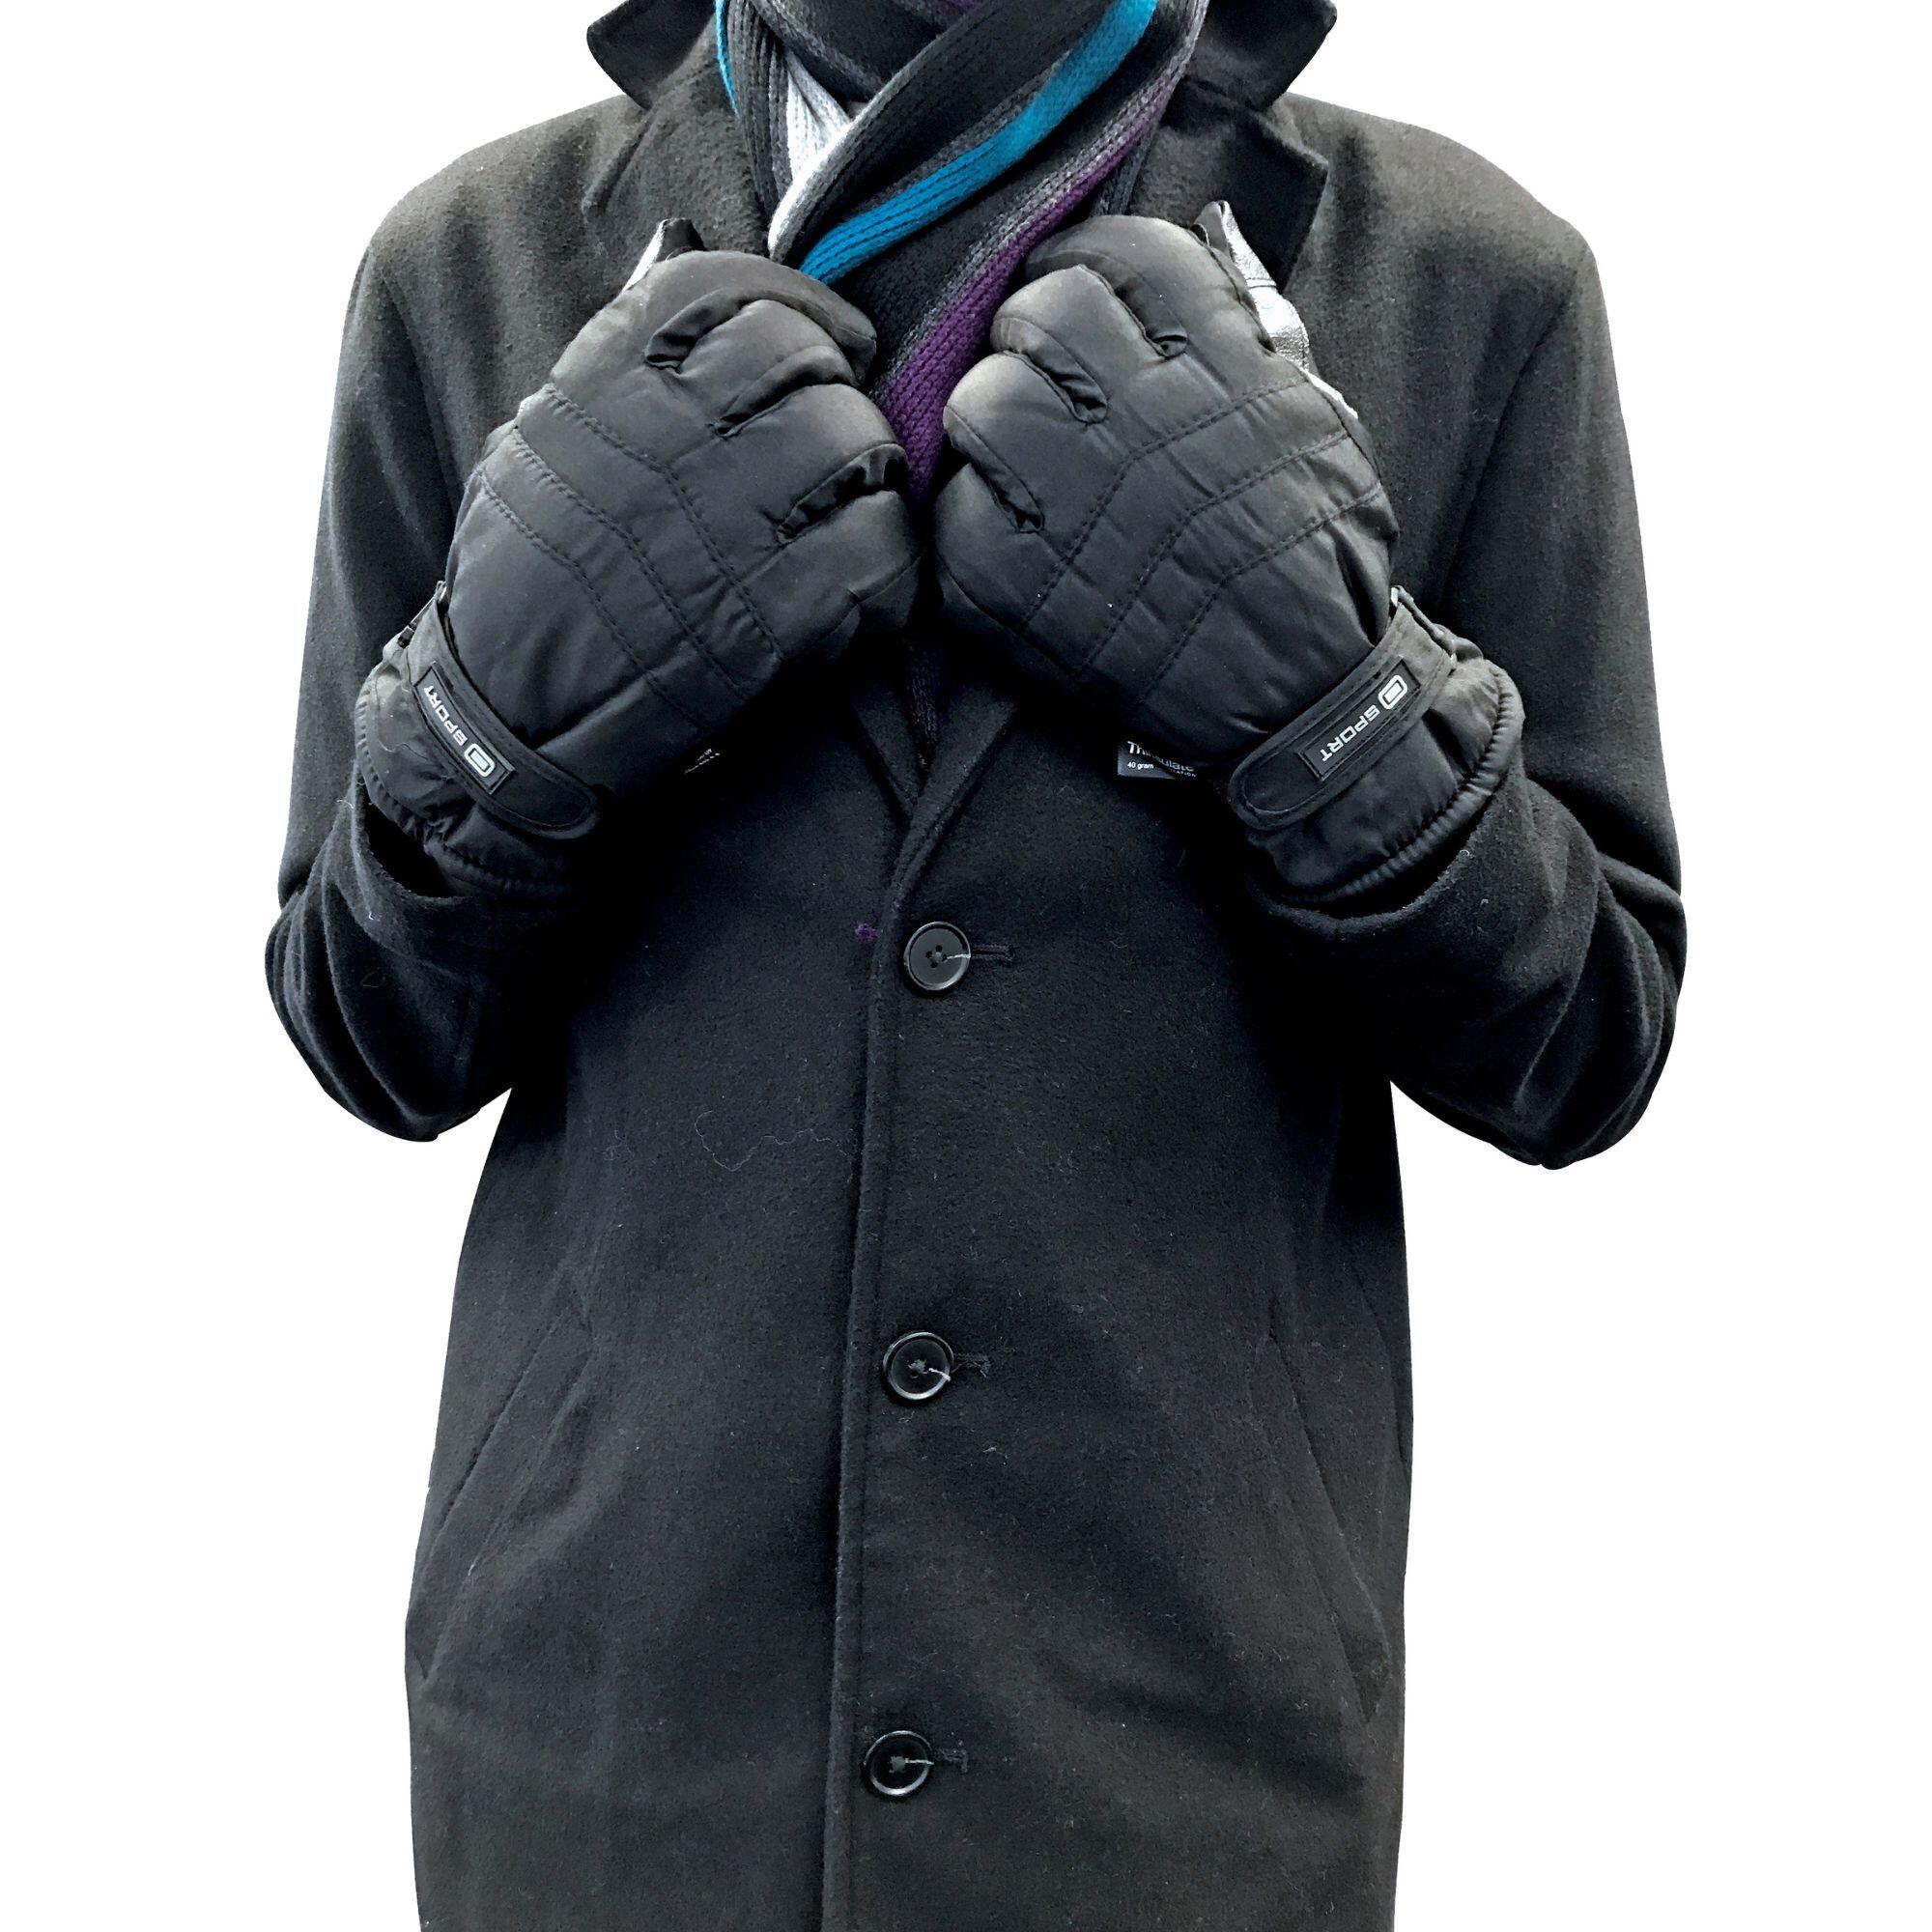 Mens 3M Thinsulate 40 gram Thermal Insulated Waterproof Ski Gloves 5/6